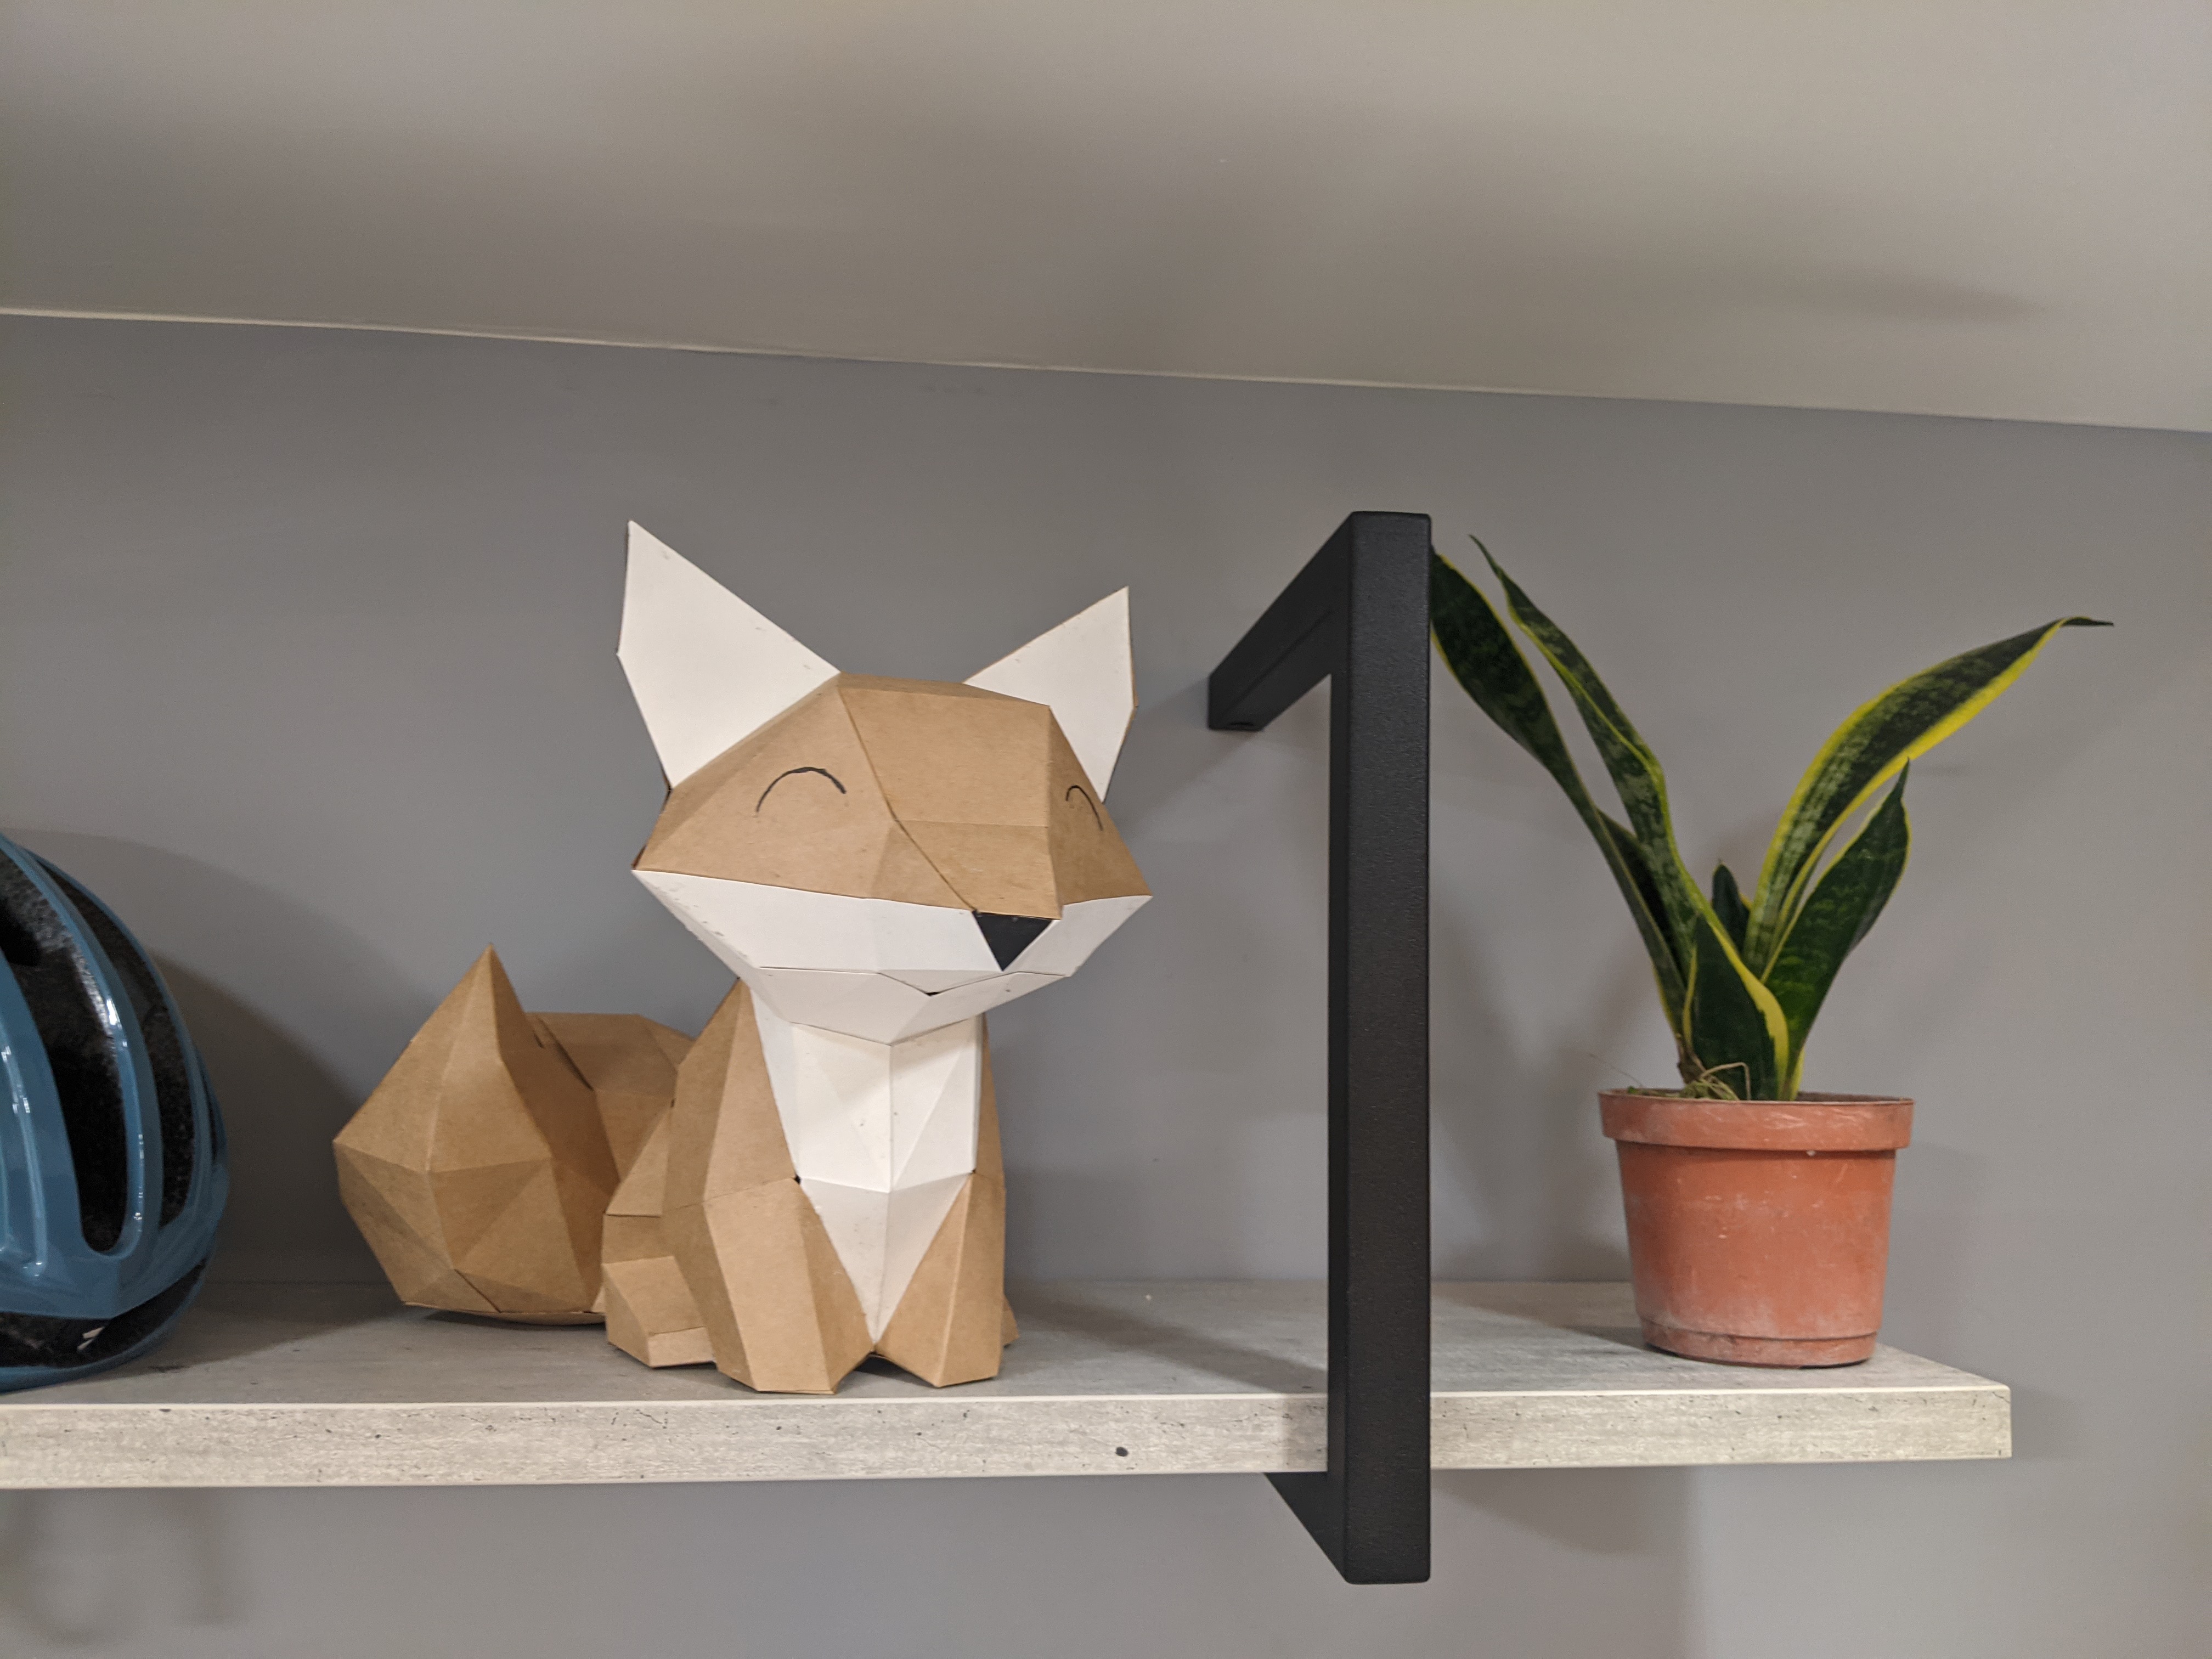 A cute papercraft fox, sitting on a shelf next to a plant and a bike helmet.